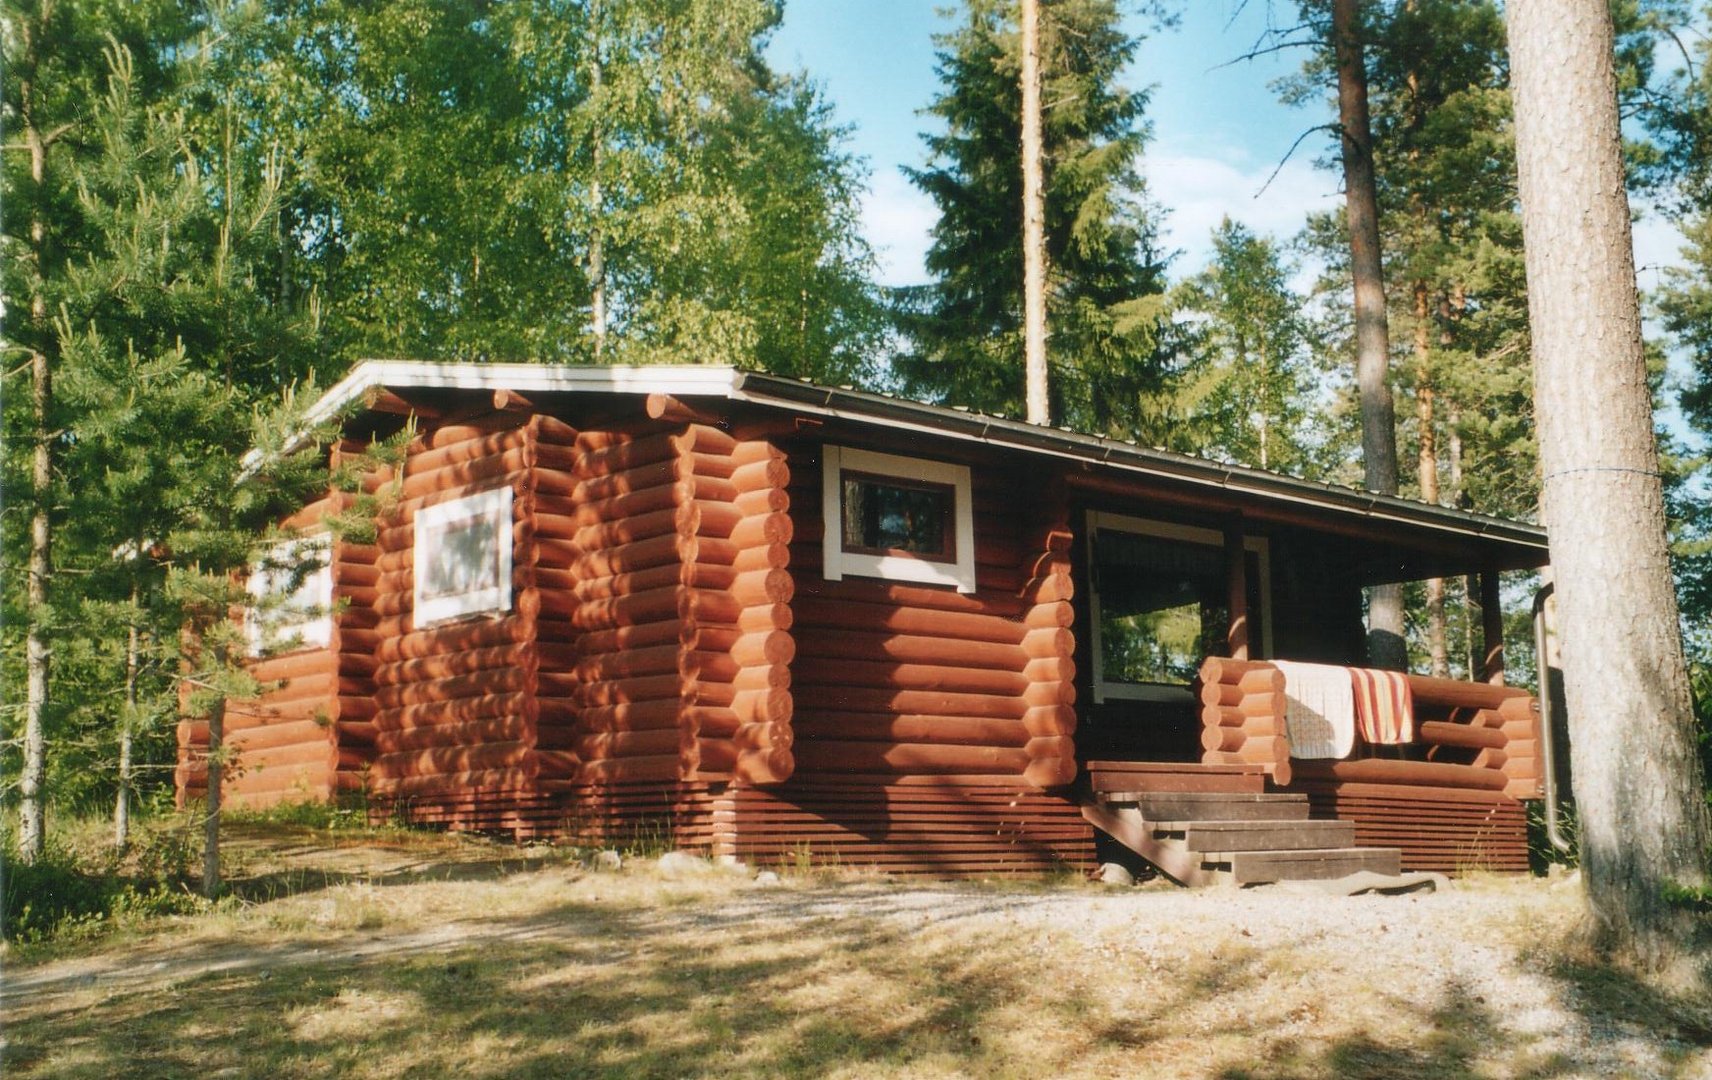 Mökki 2004 in Finnland